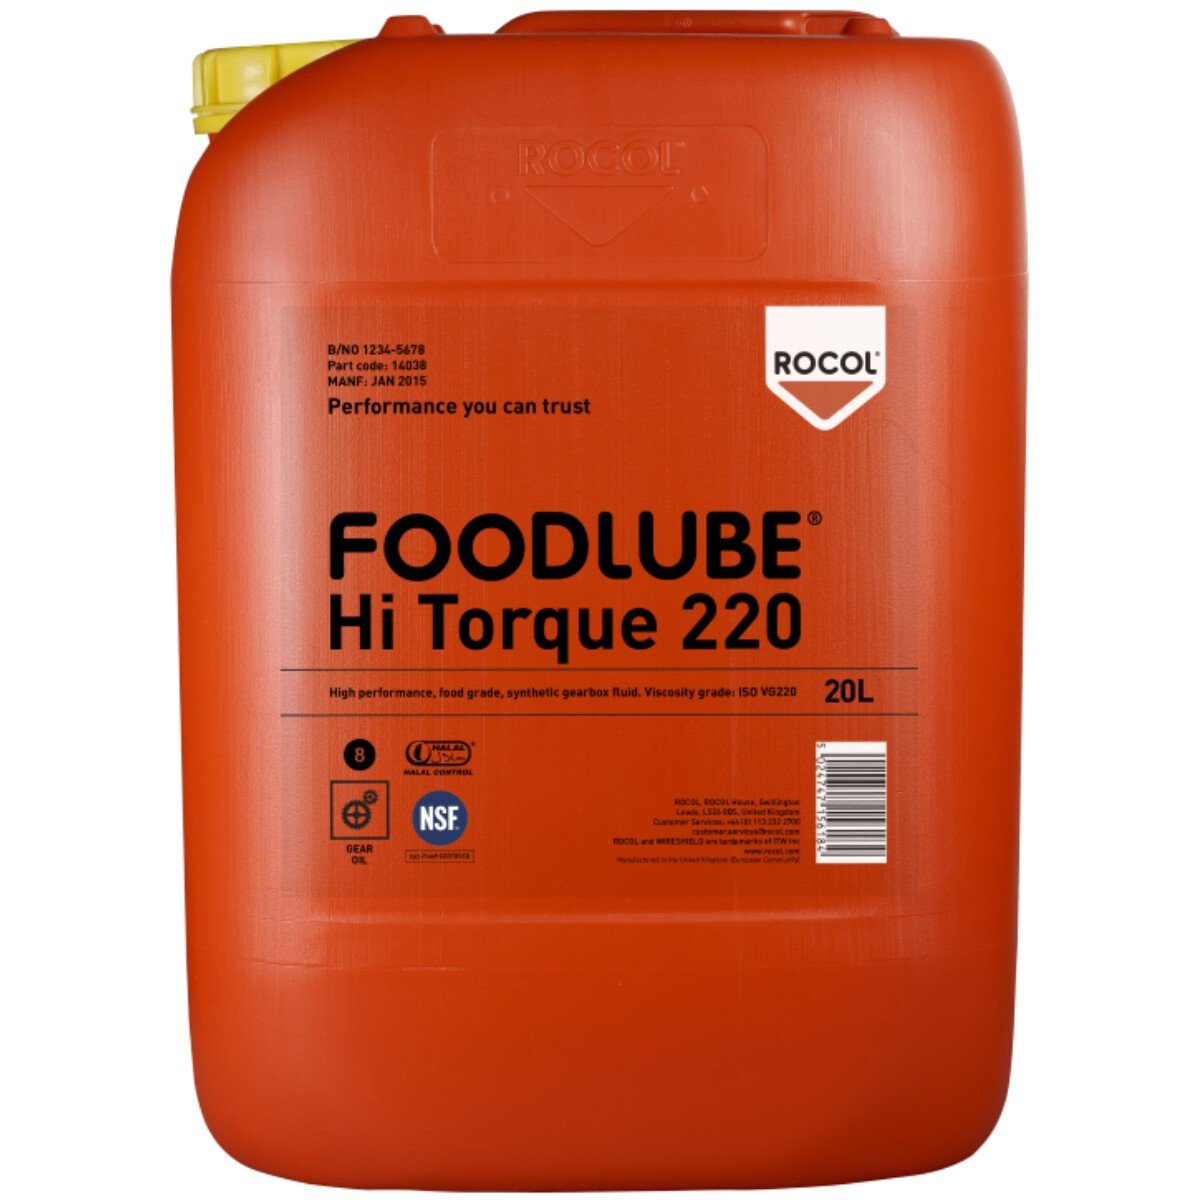 Rocol 15525 Foodlube Hi Torque 220 (with SUPS) Gear Fluids (NSF Registered) 20ltr